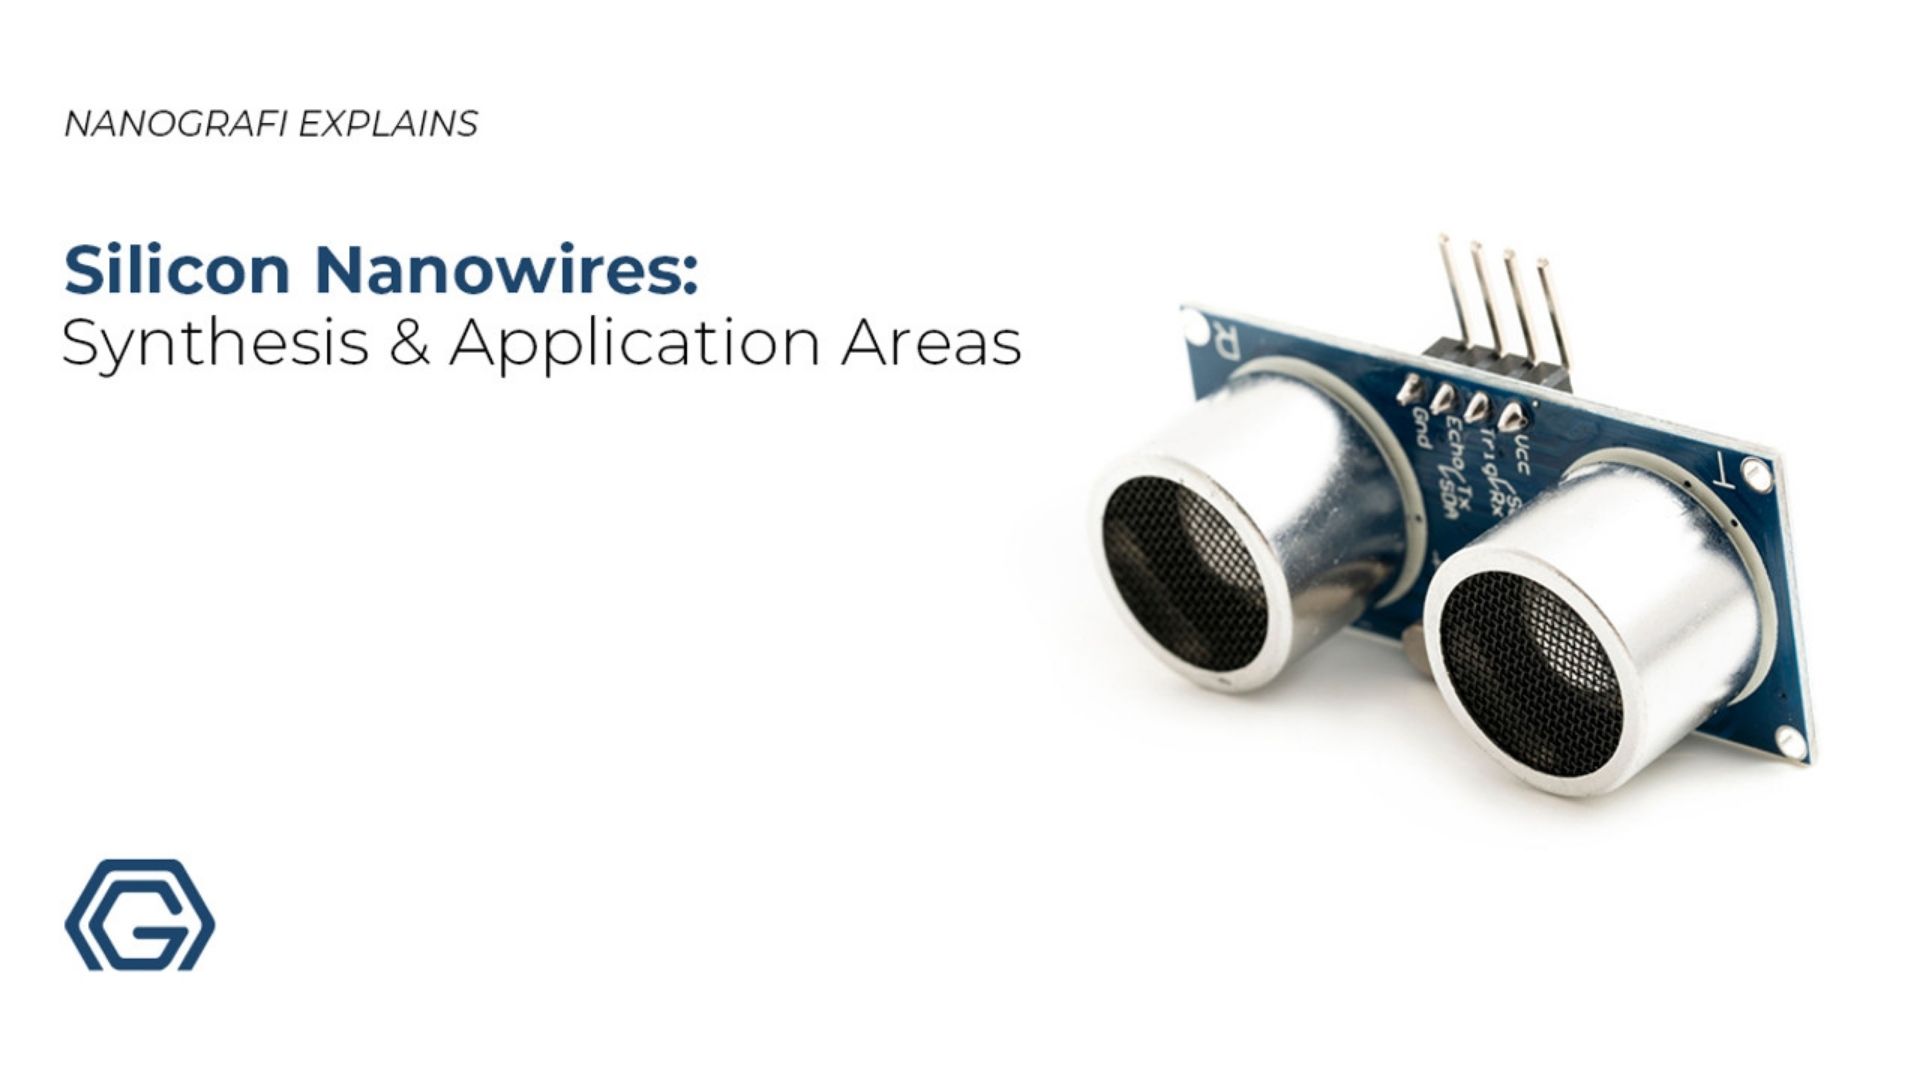 Silicon Nanowires: Synthesis & Application Areas